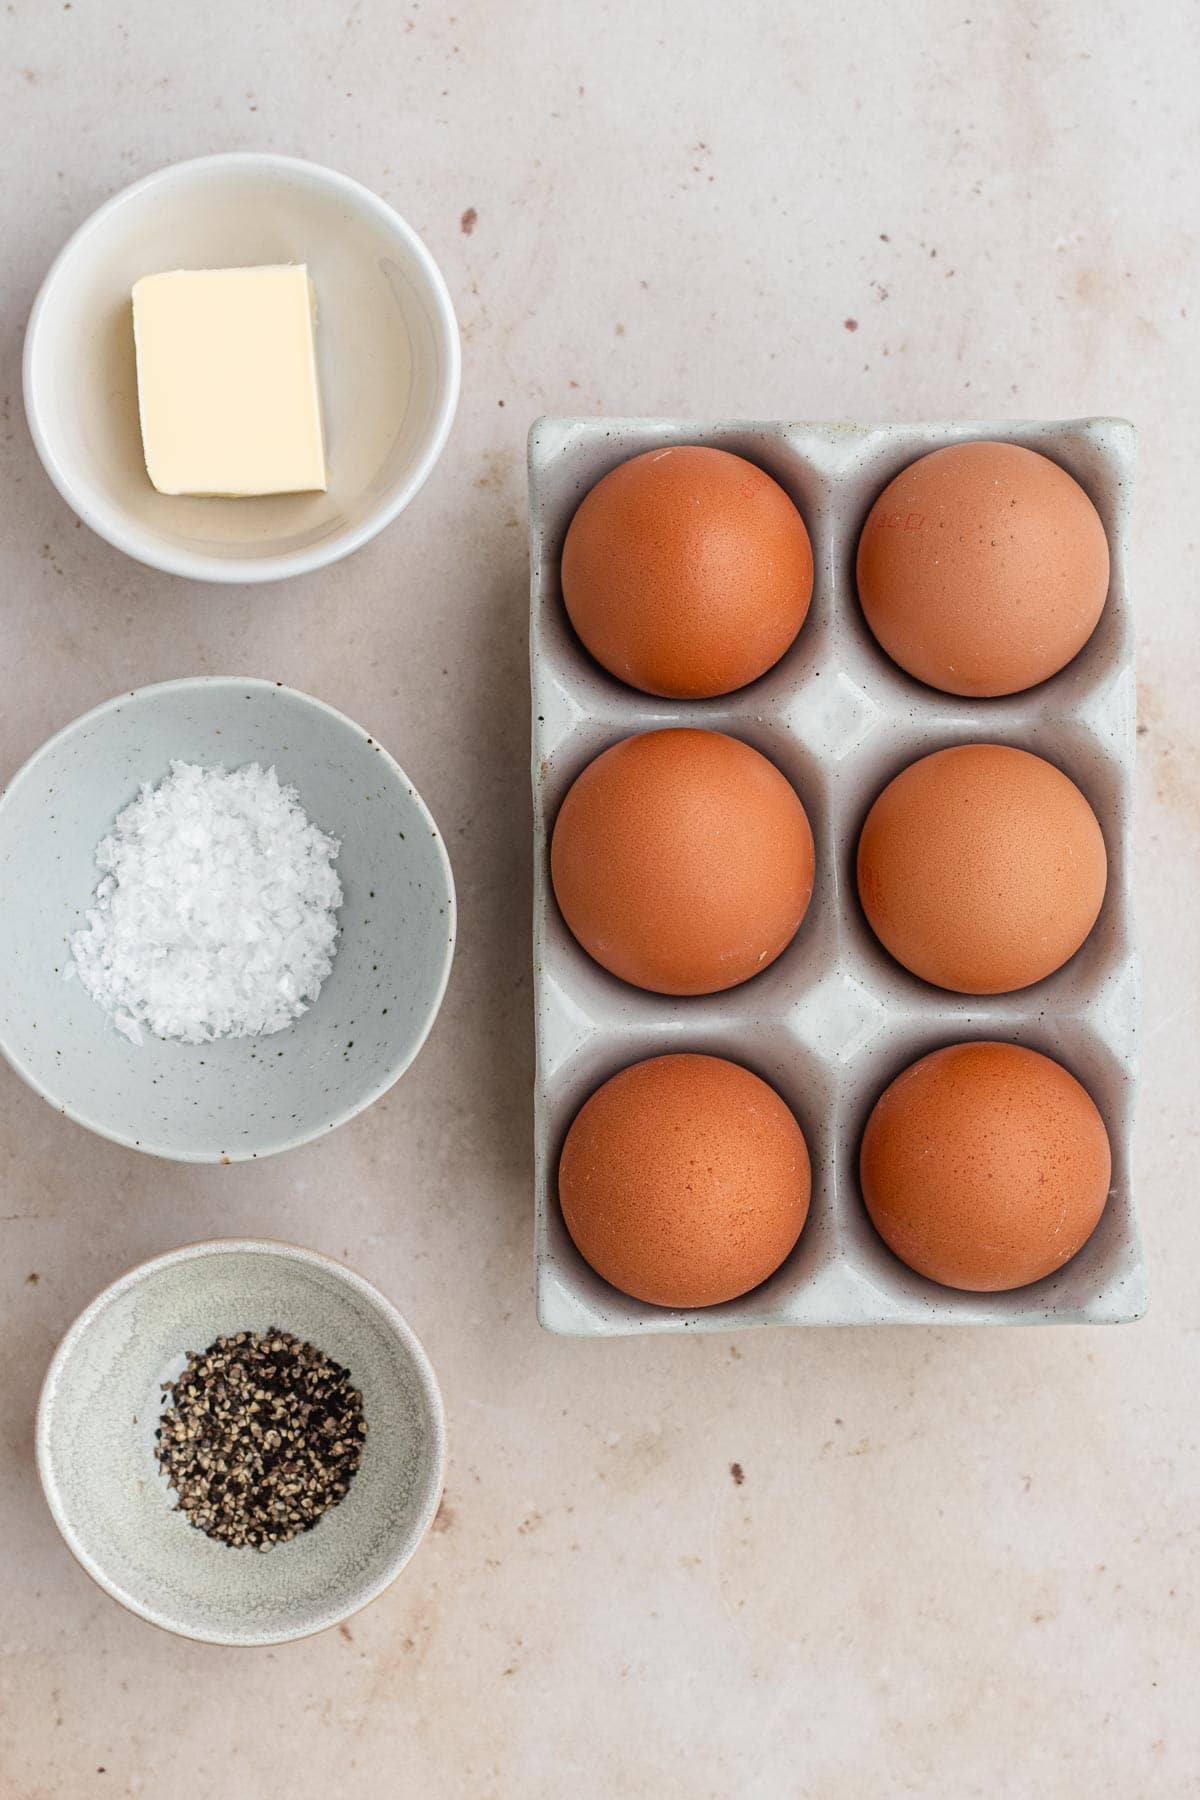 Over Easy Eggs Ingredients